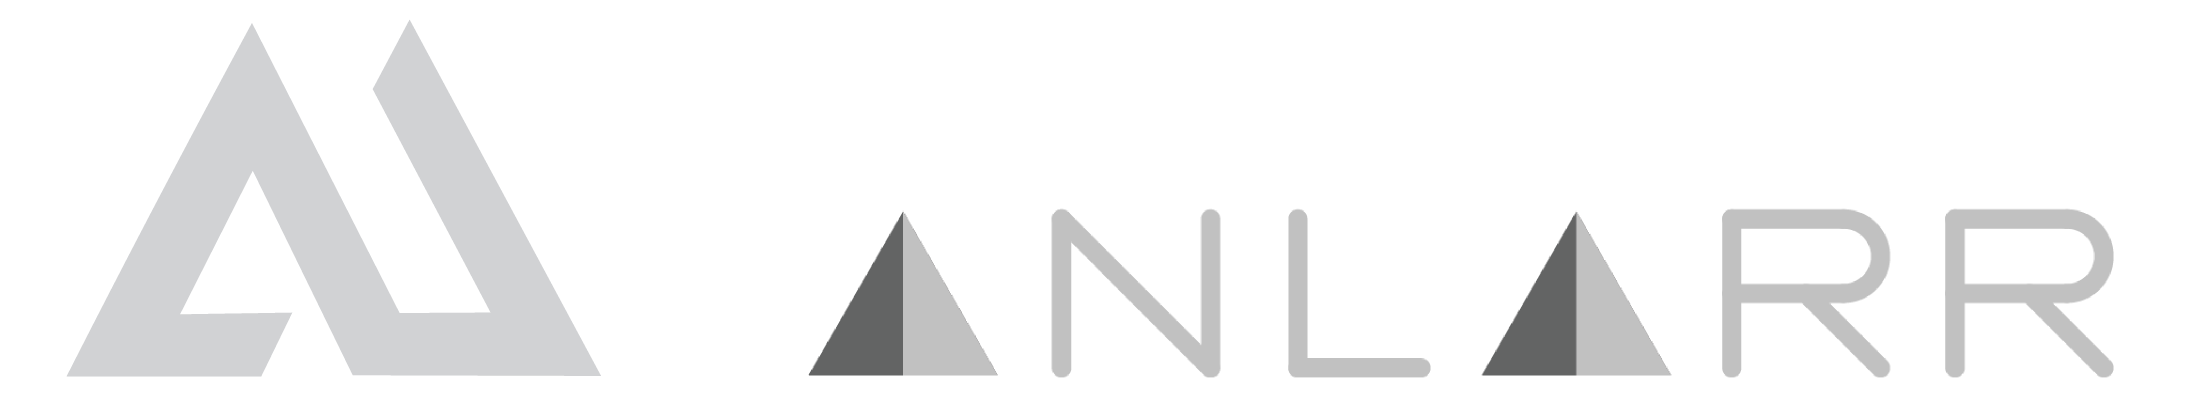 ANLARR-logo